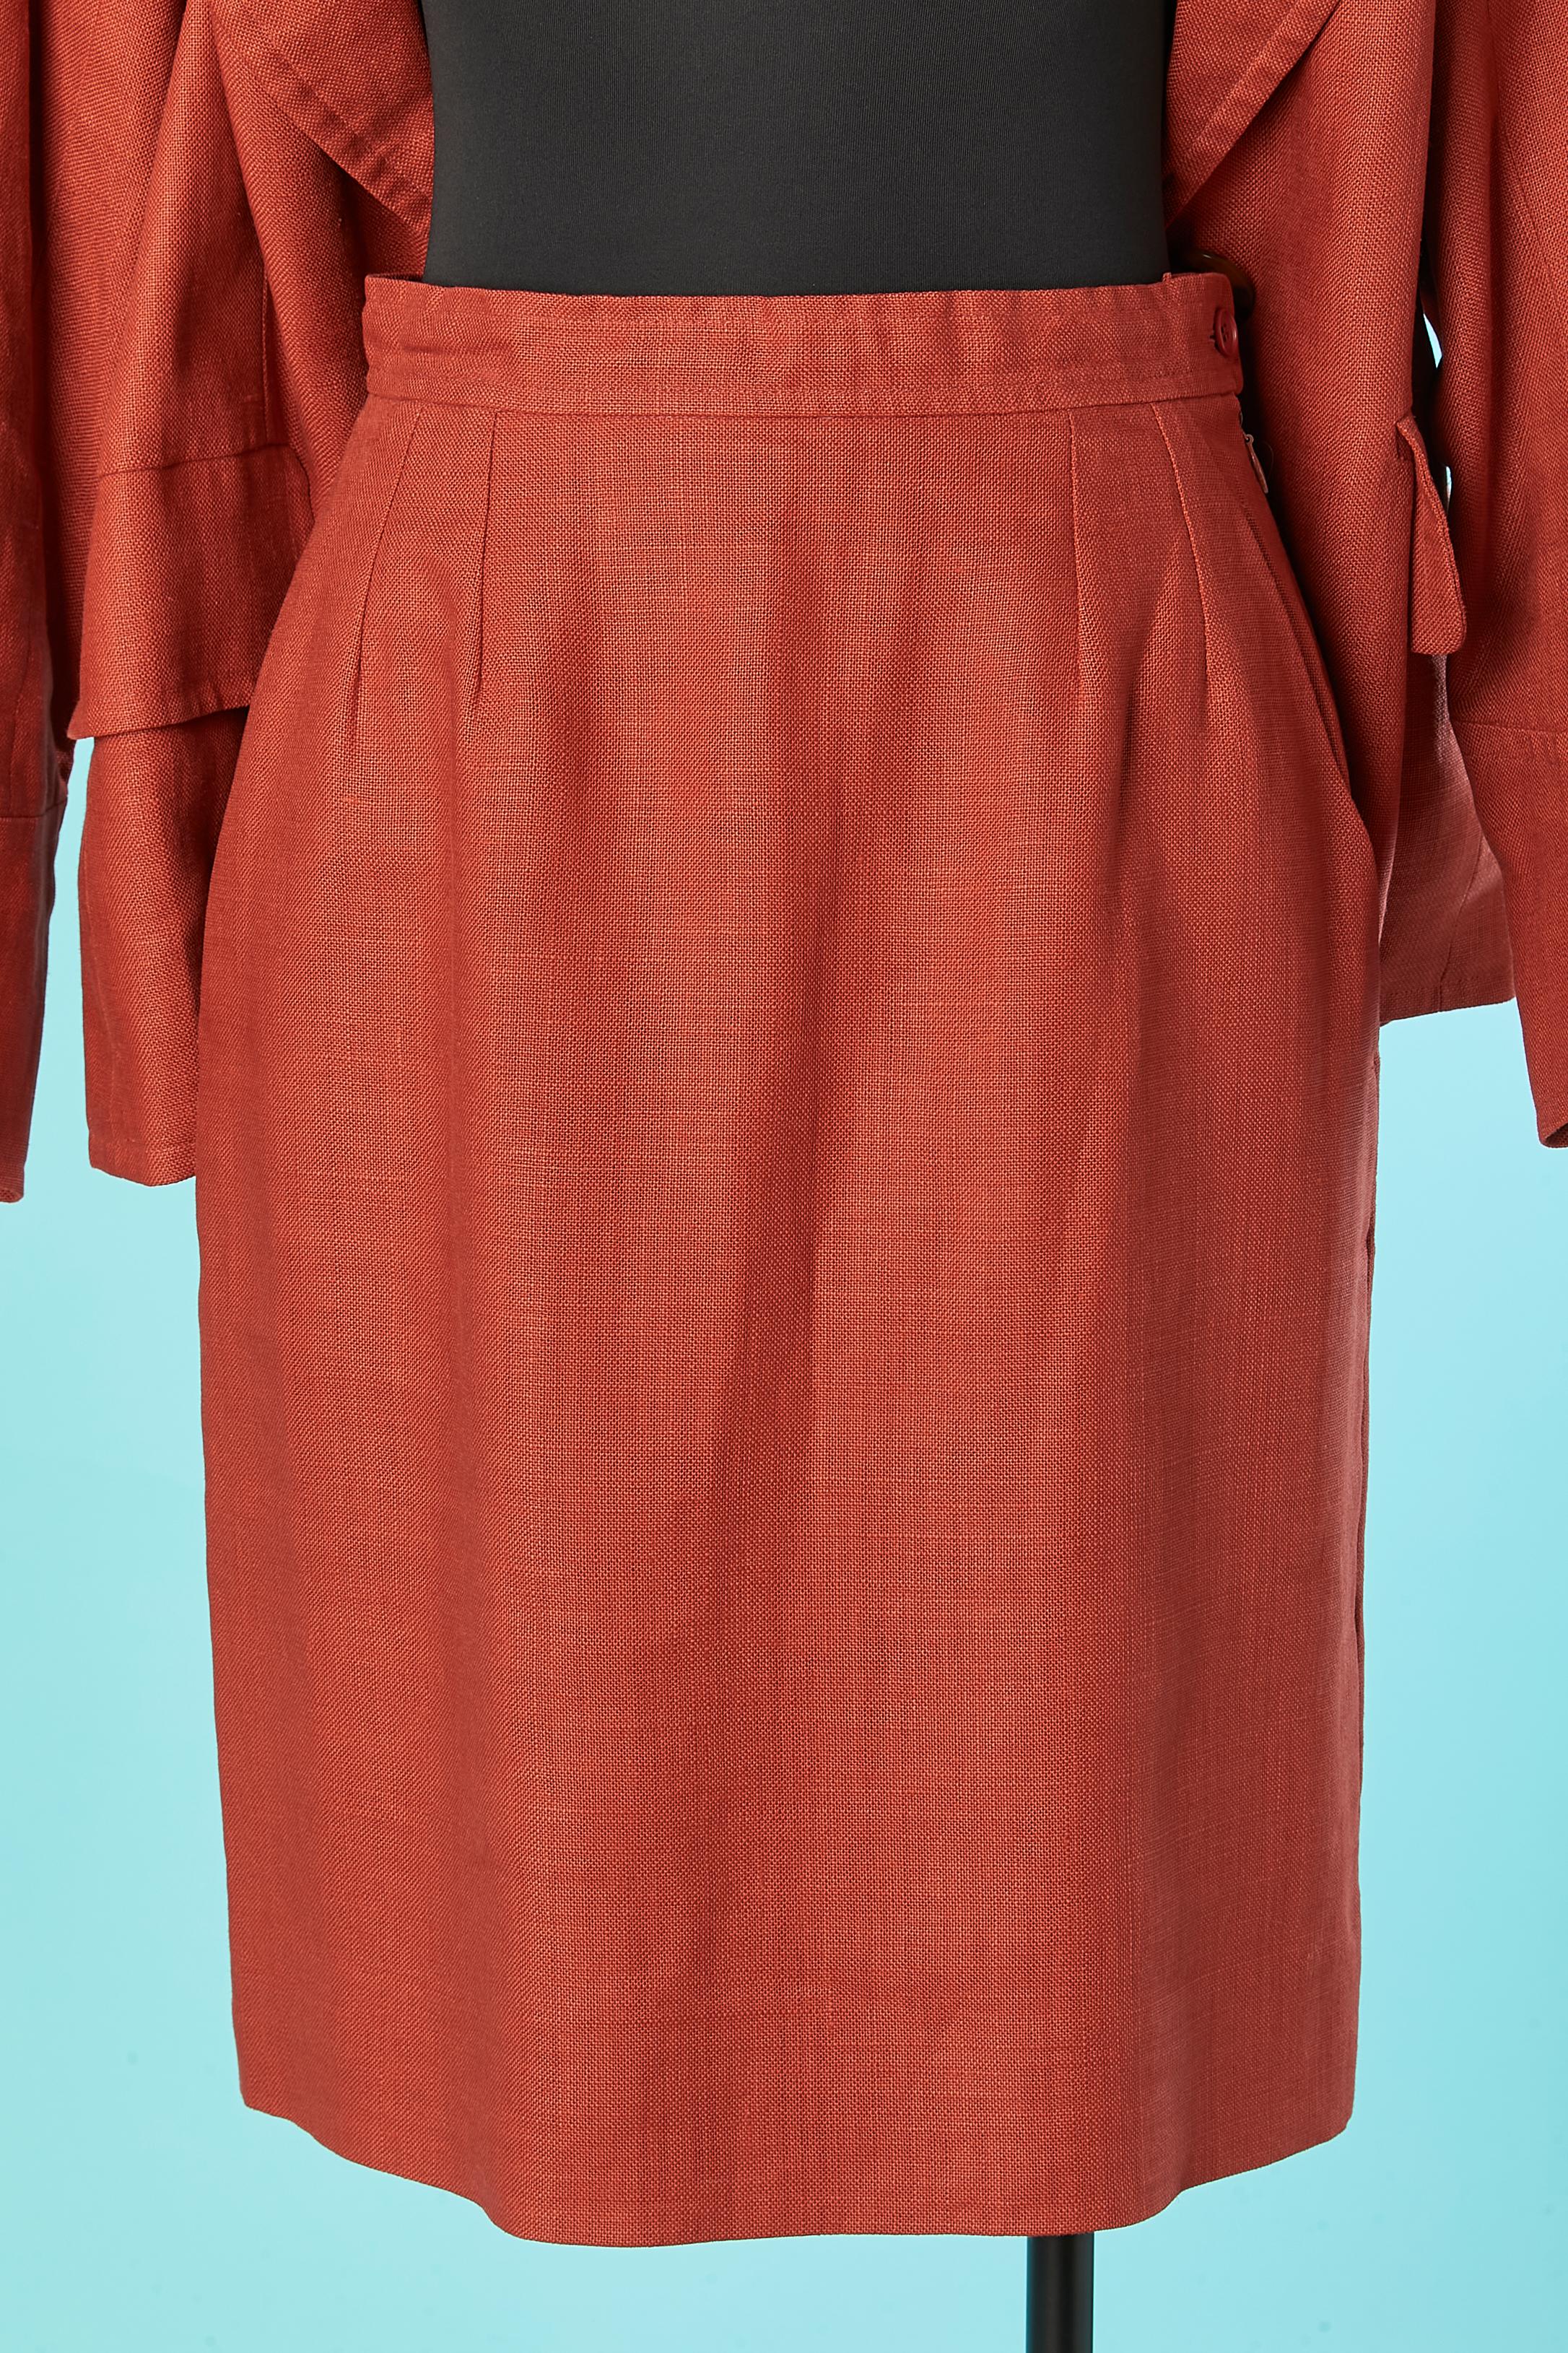 Terracotta linen skirt-suit Yves Saint Laurent Rive Gauche SS 1994 For Sale 3